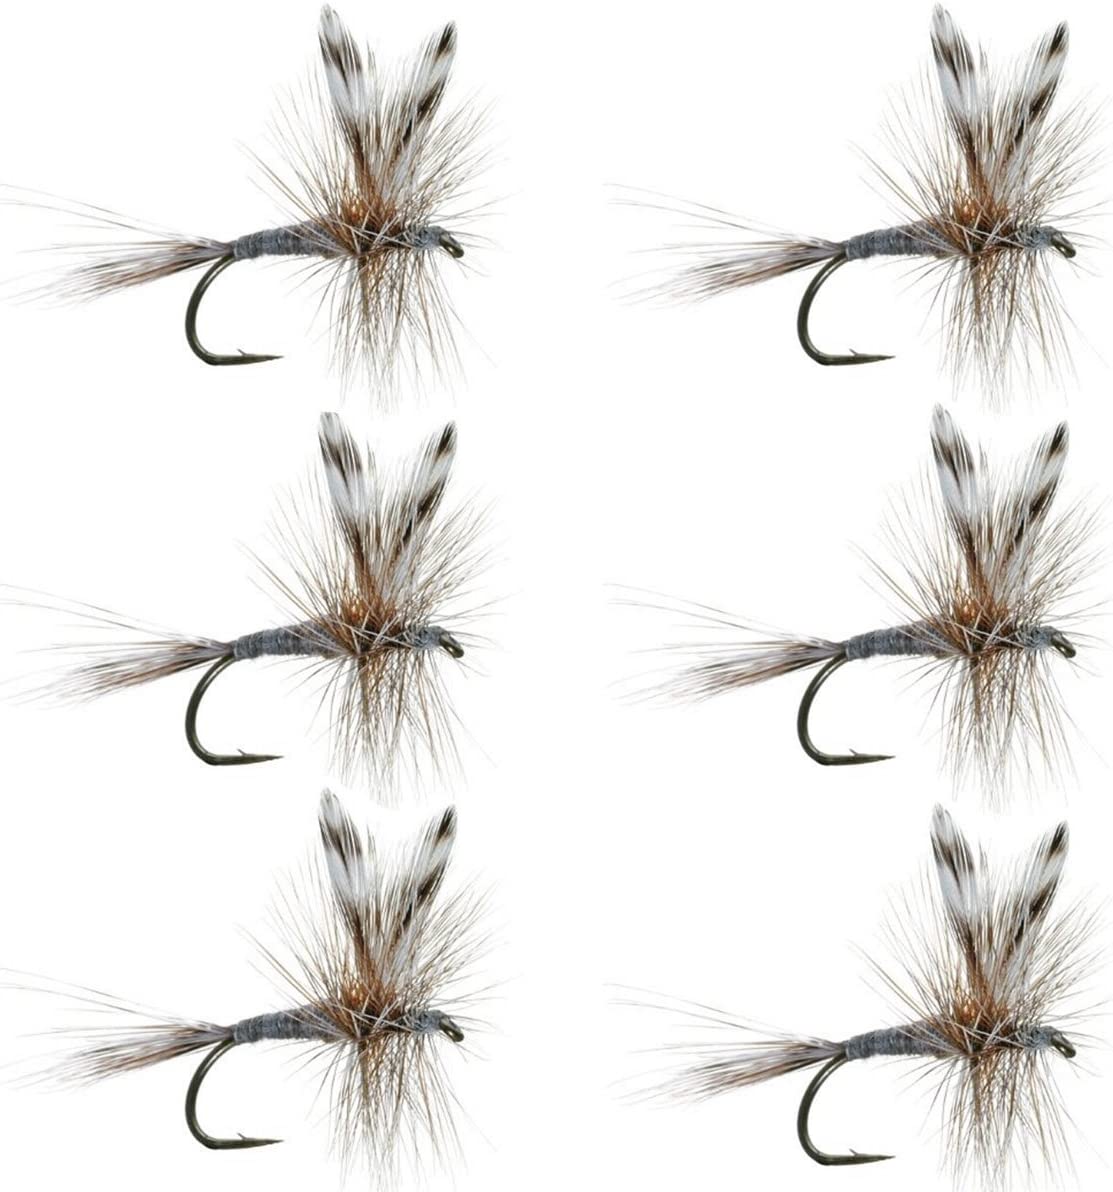 Adams Classic Dry Fly - Anzuelo para 6 moscas, tamaño 12